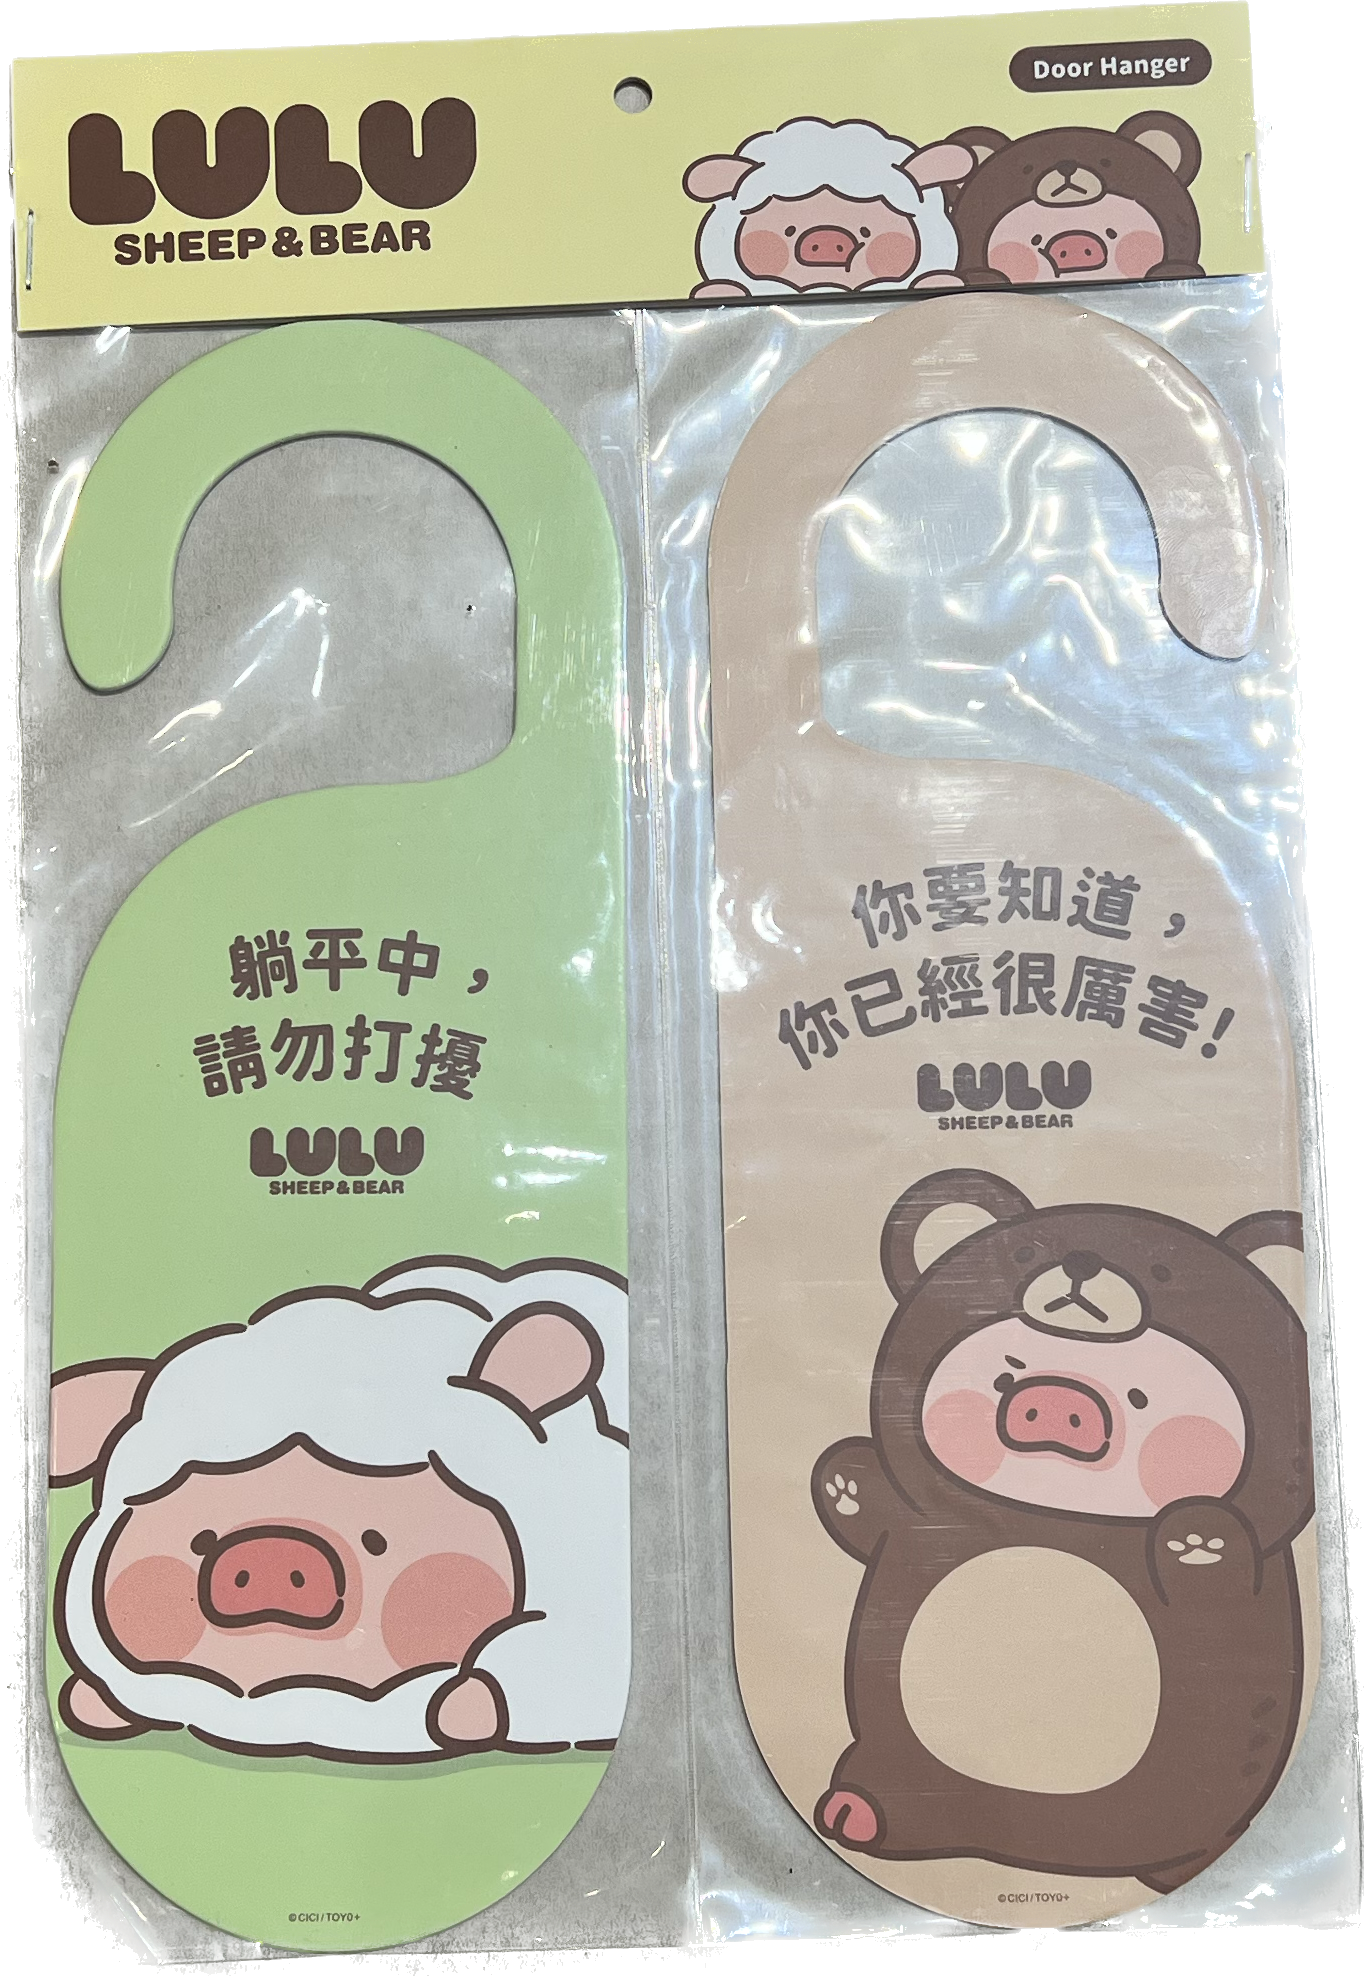 LuLu the Piggy Bear & Sheep - Door Hanger with msg